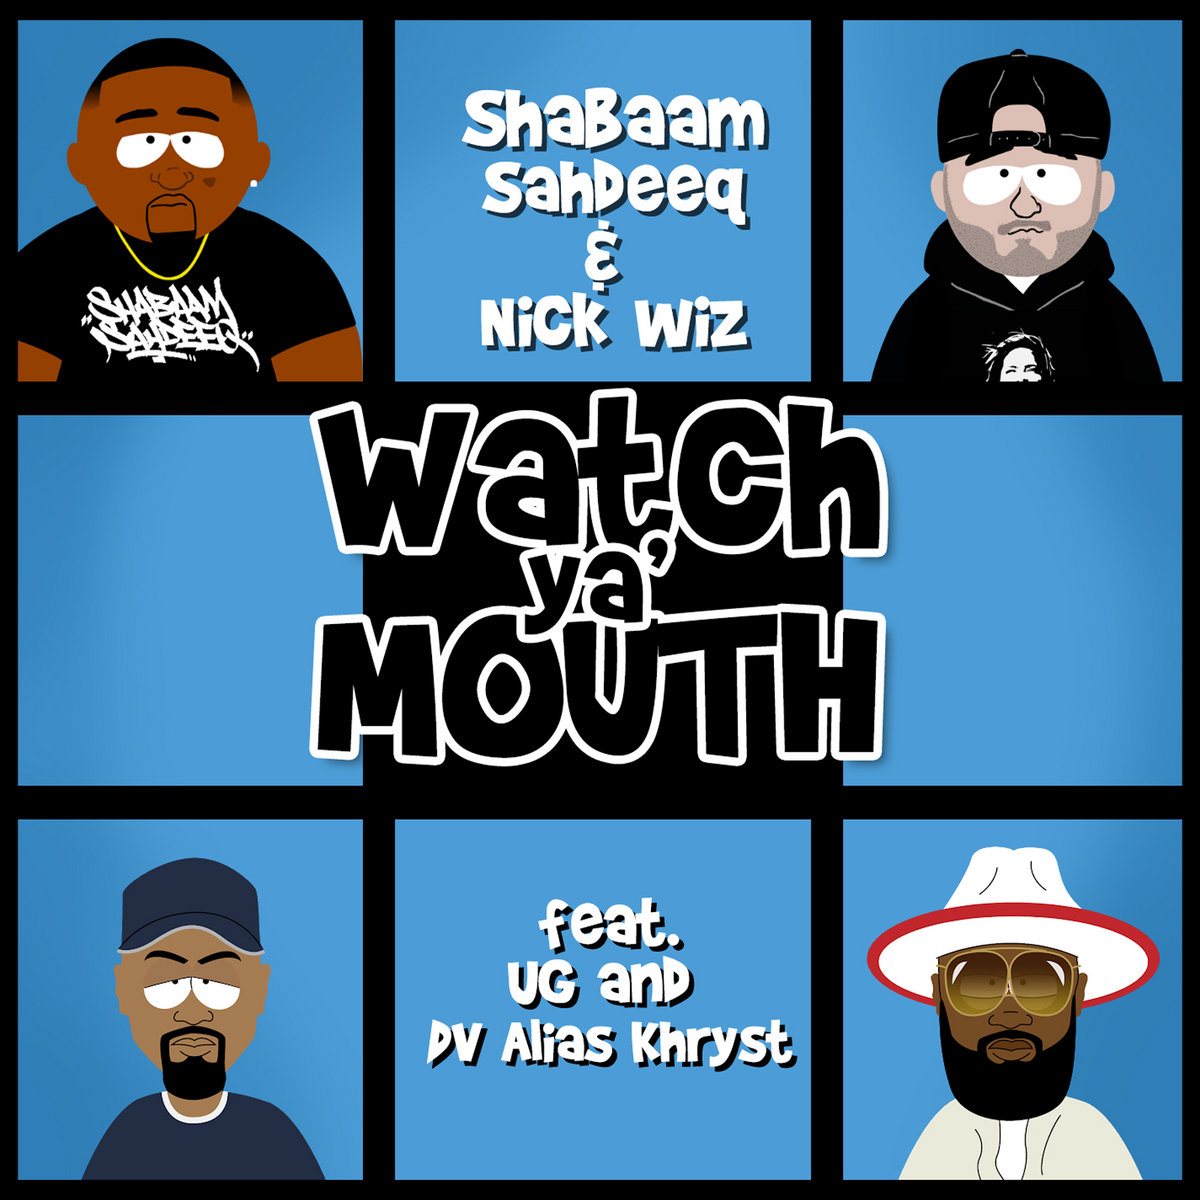 Watch_ya__mouth_feat_ug___dv_alias_khryst_prod_by_nick_wiz